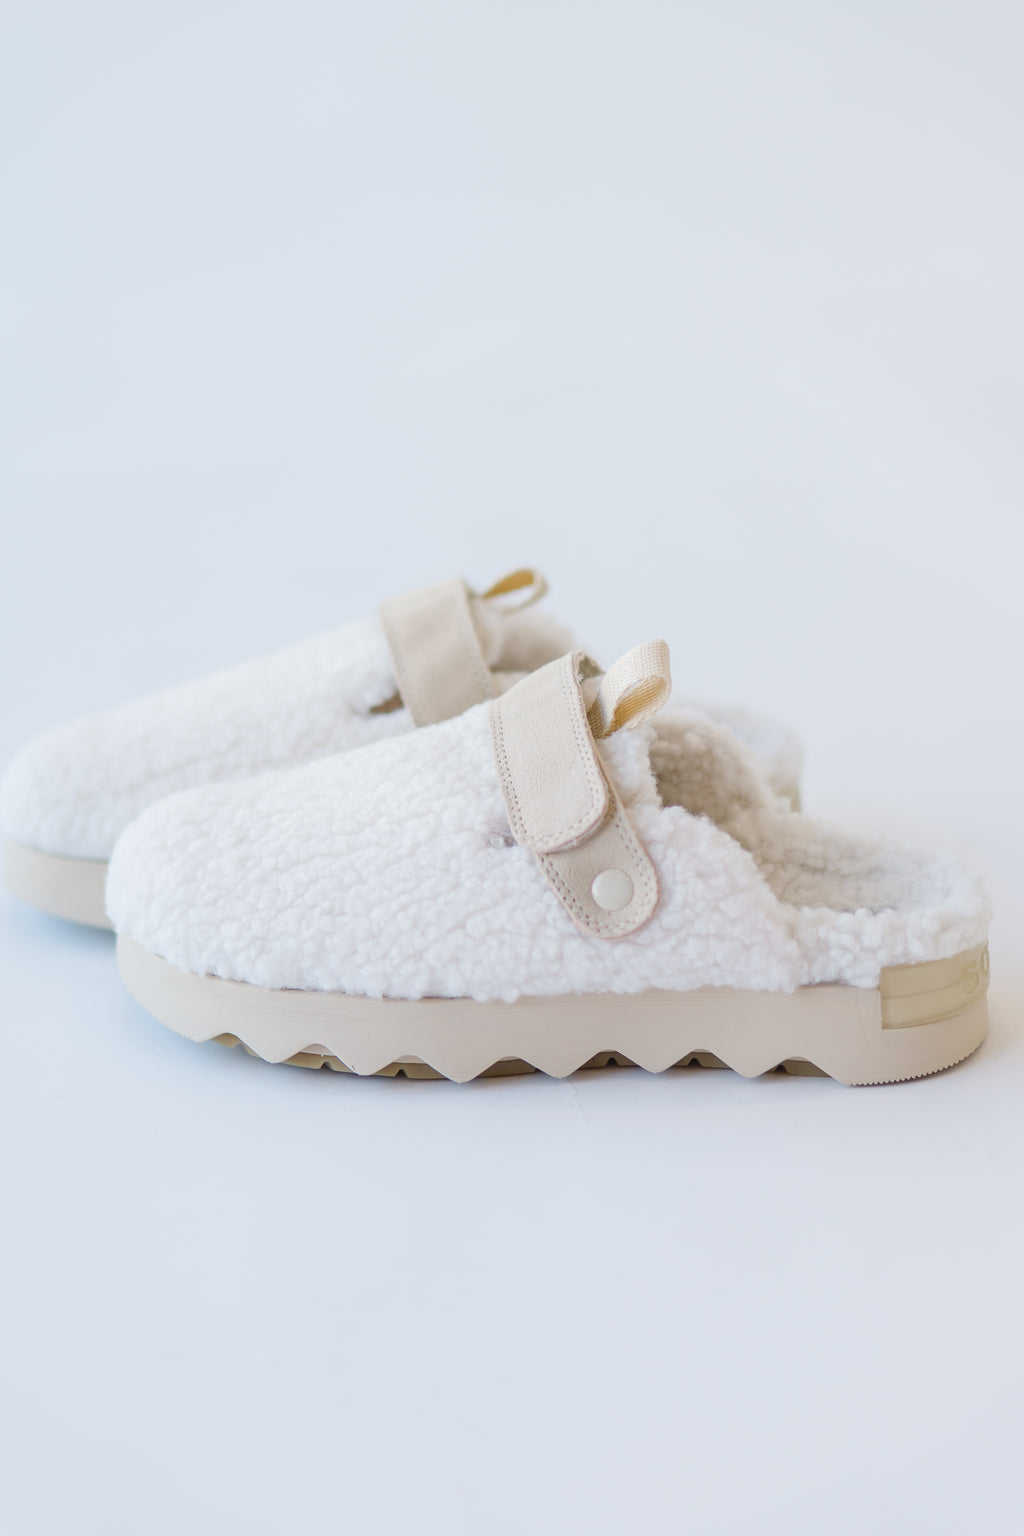 Shoes, Sandals & Boots | Piper & Scoot | Online Boutique